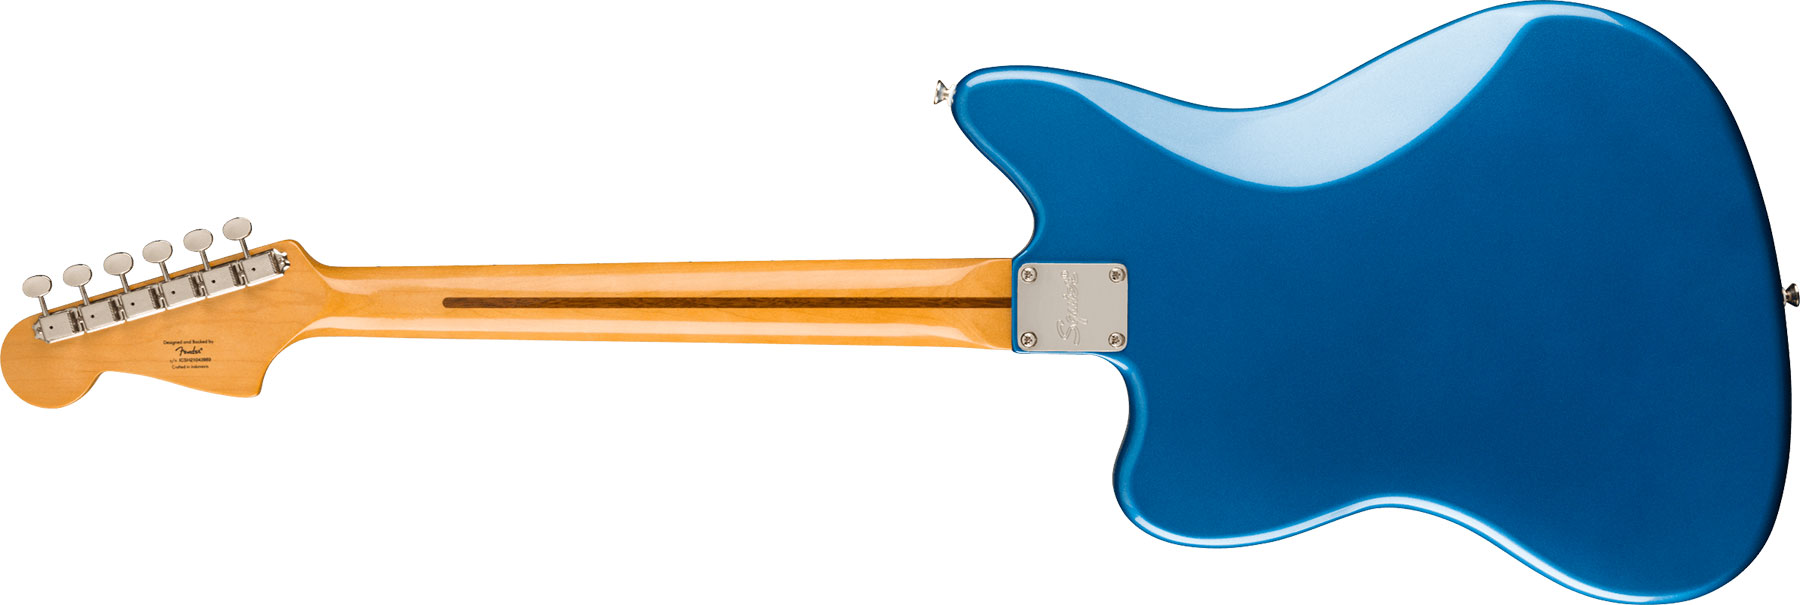 Squier Jazzmaster Classic Vibe '70s Fsr Ltd Lau - Lake Placid Blue W/ Matching Headstock - Guitarra electrica retro rock - Variation 1